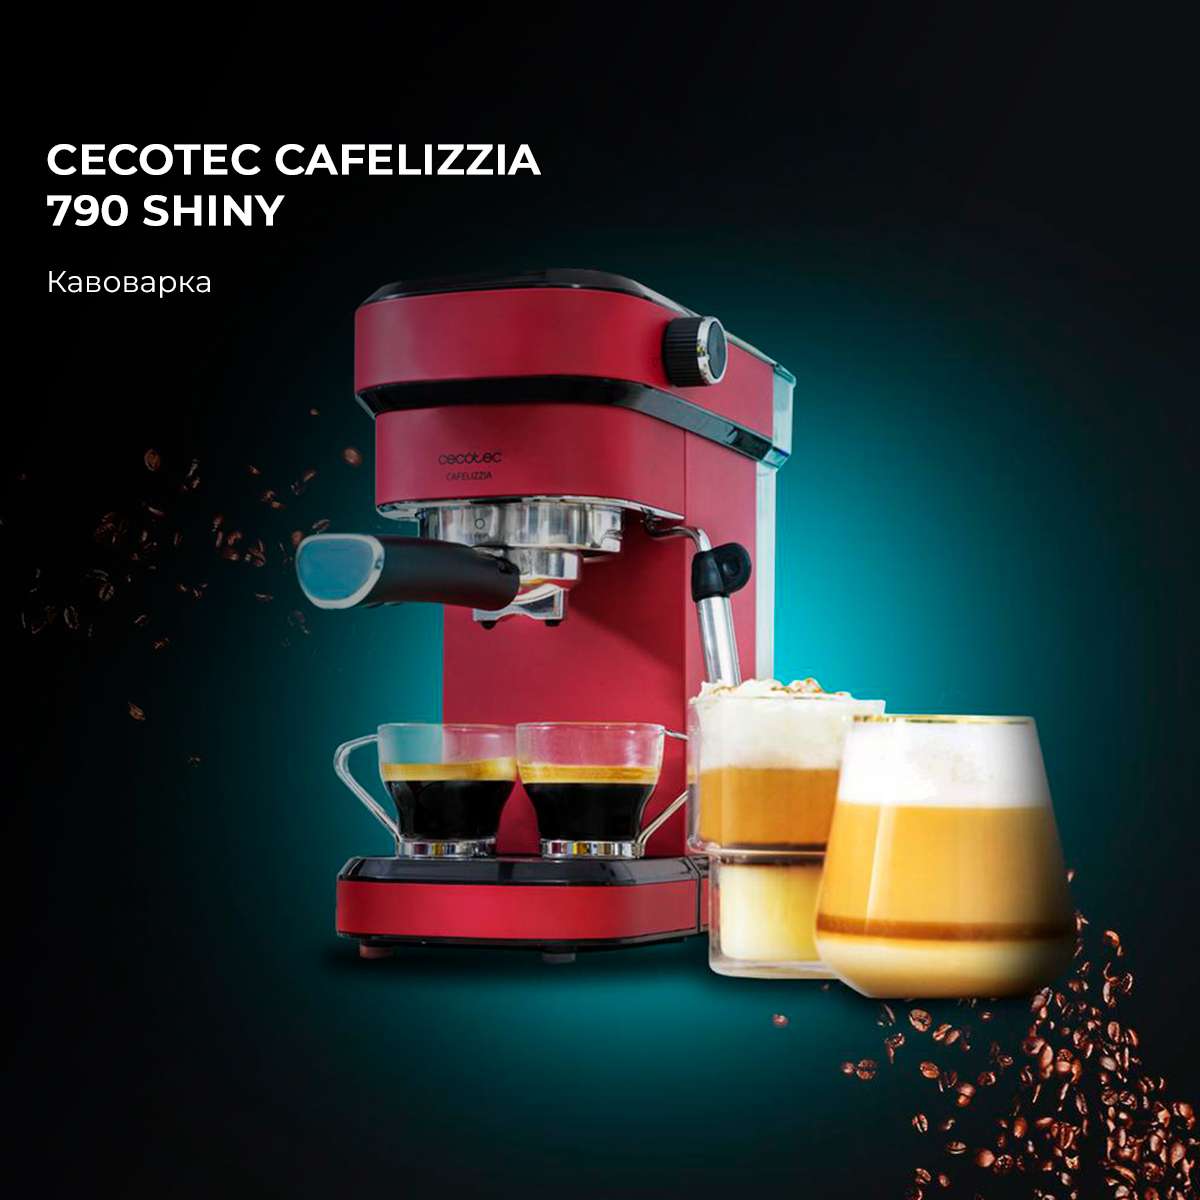 Cafetera Express CECOTEC Cafelizzia 790 Shiny